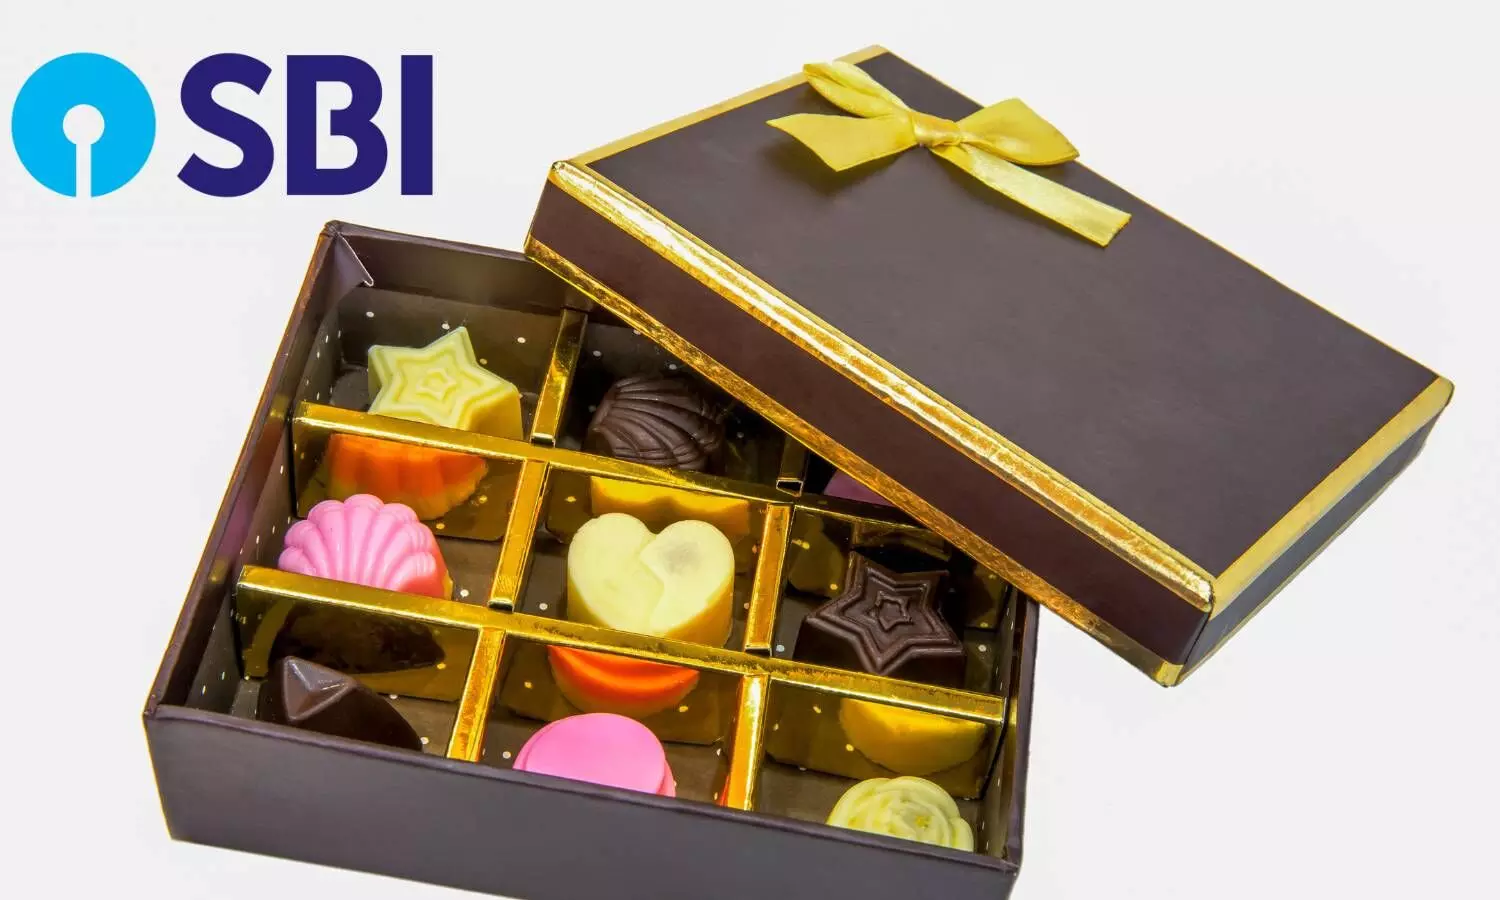 Chocolate box and sbi logo